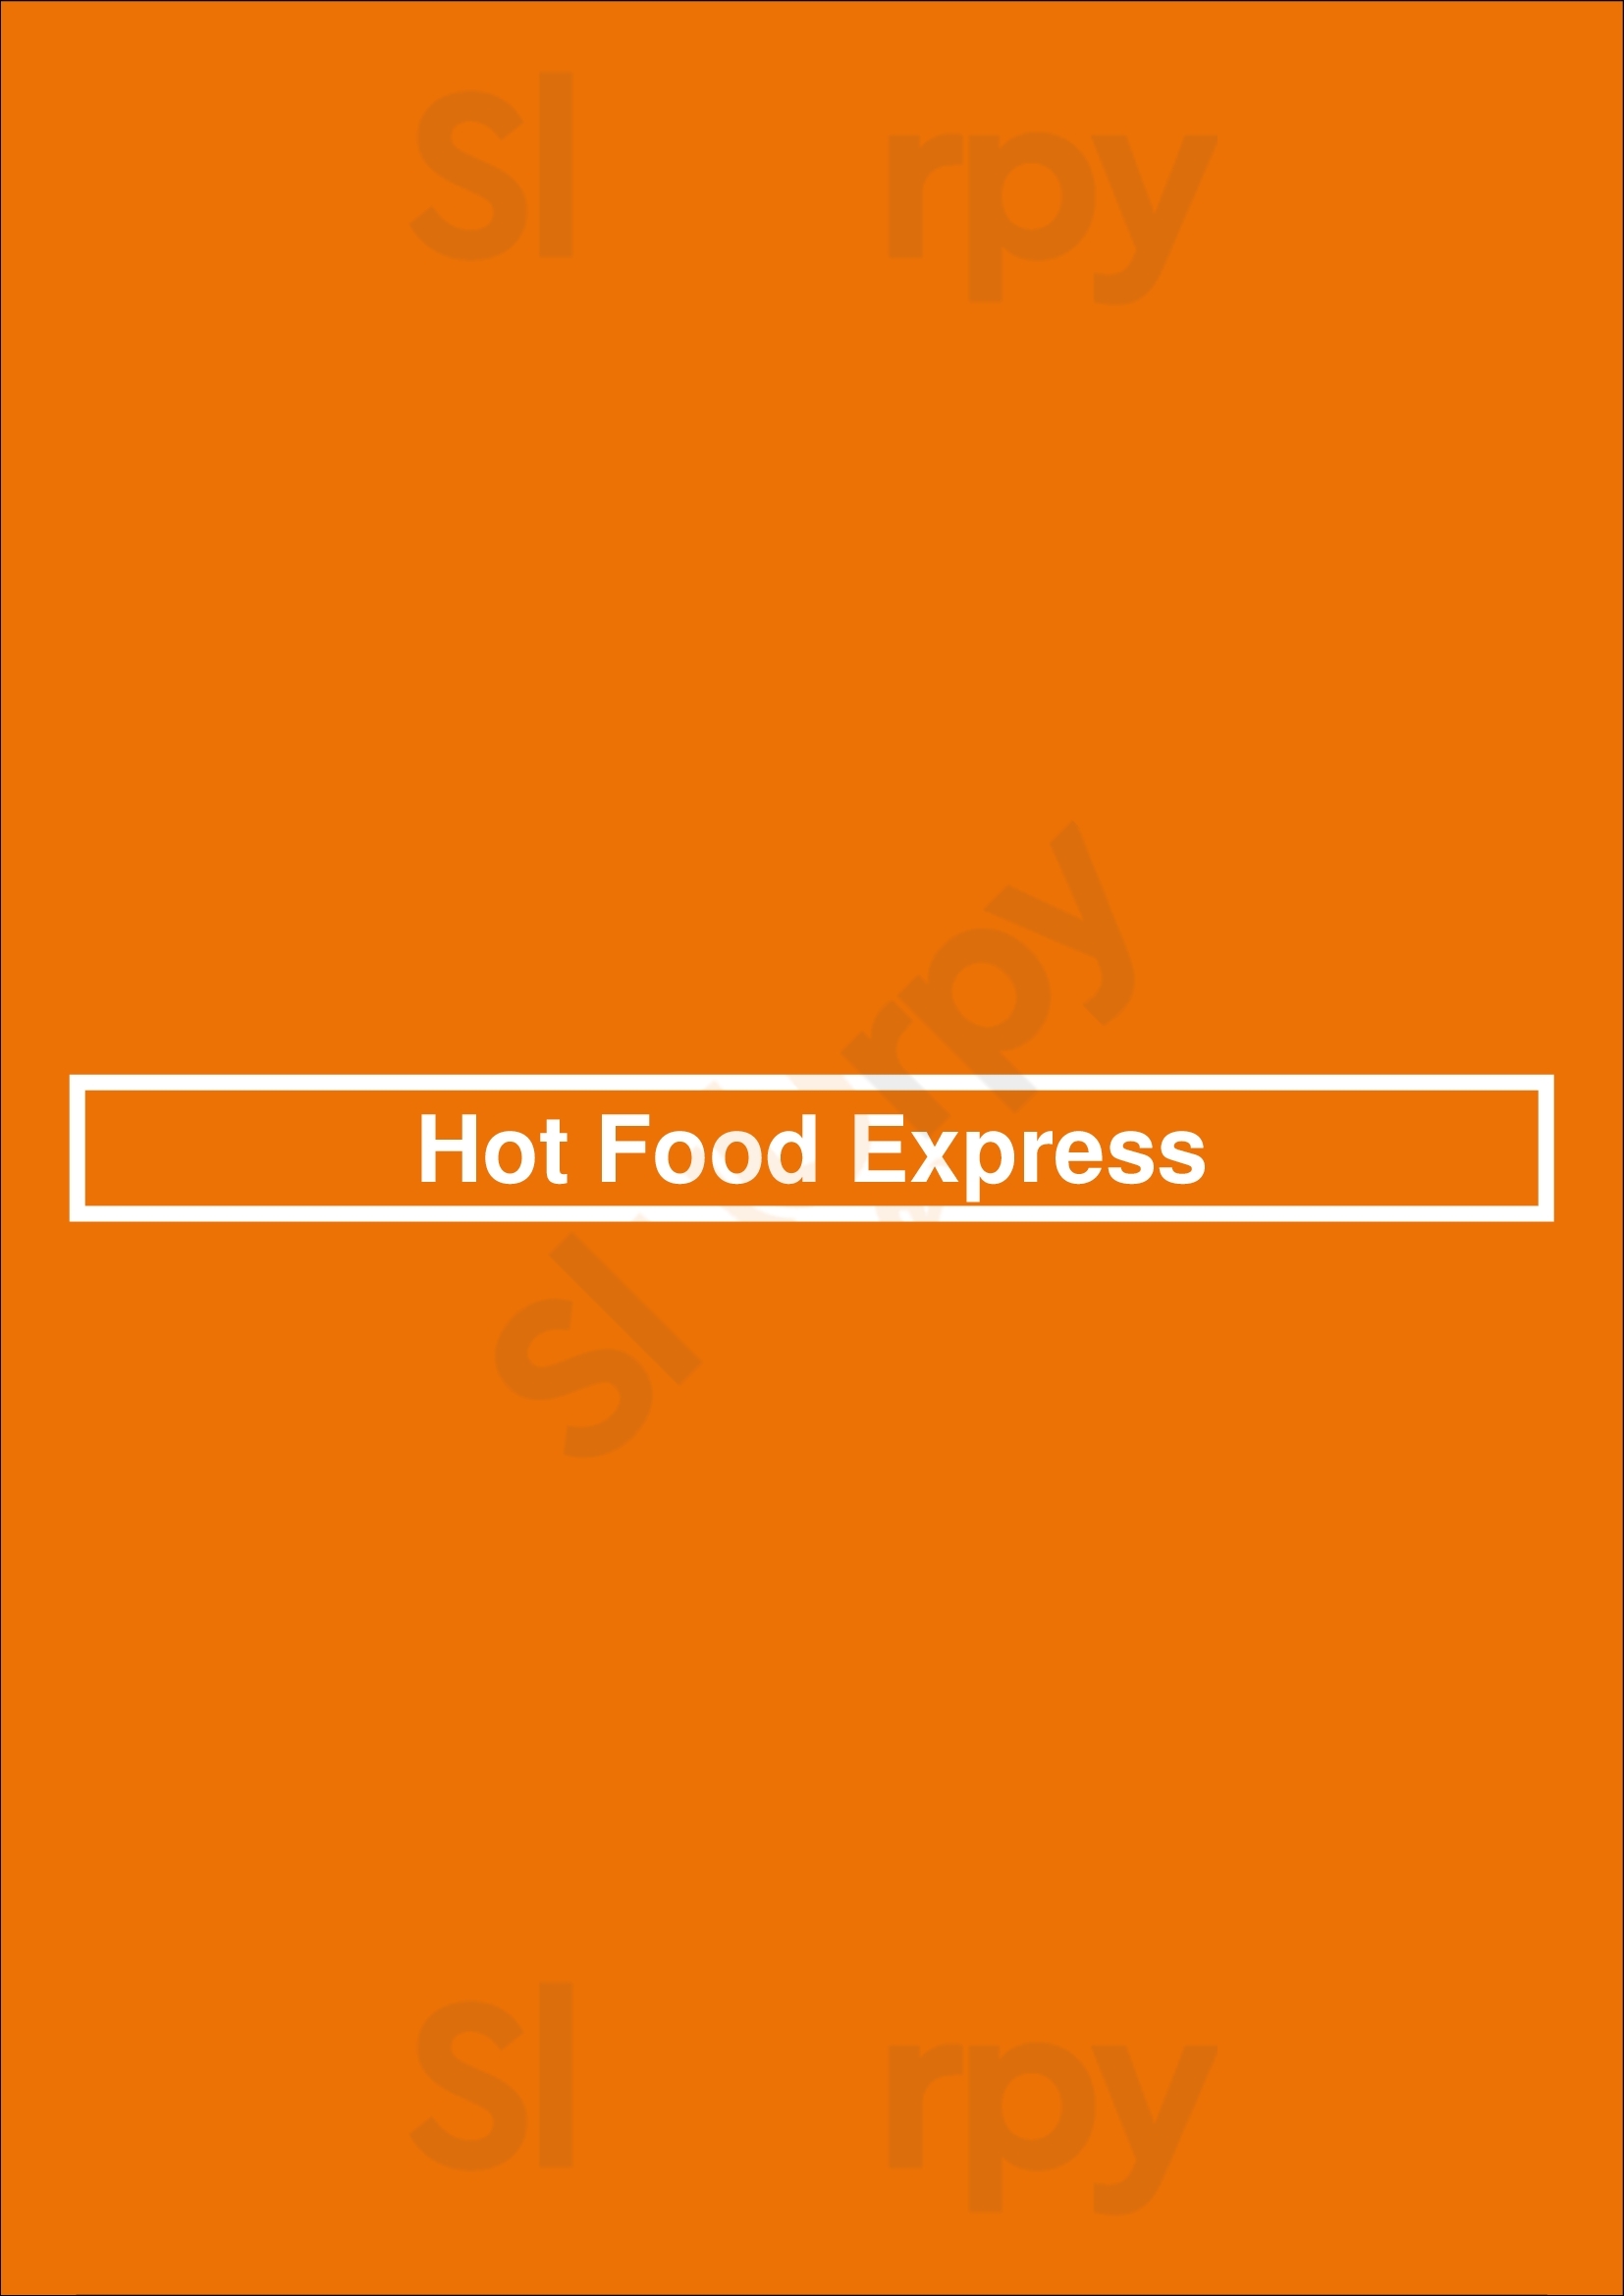 Hot Food Express Lafayette Menu - 1